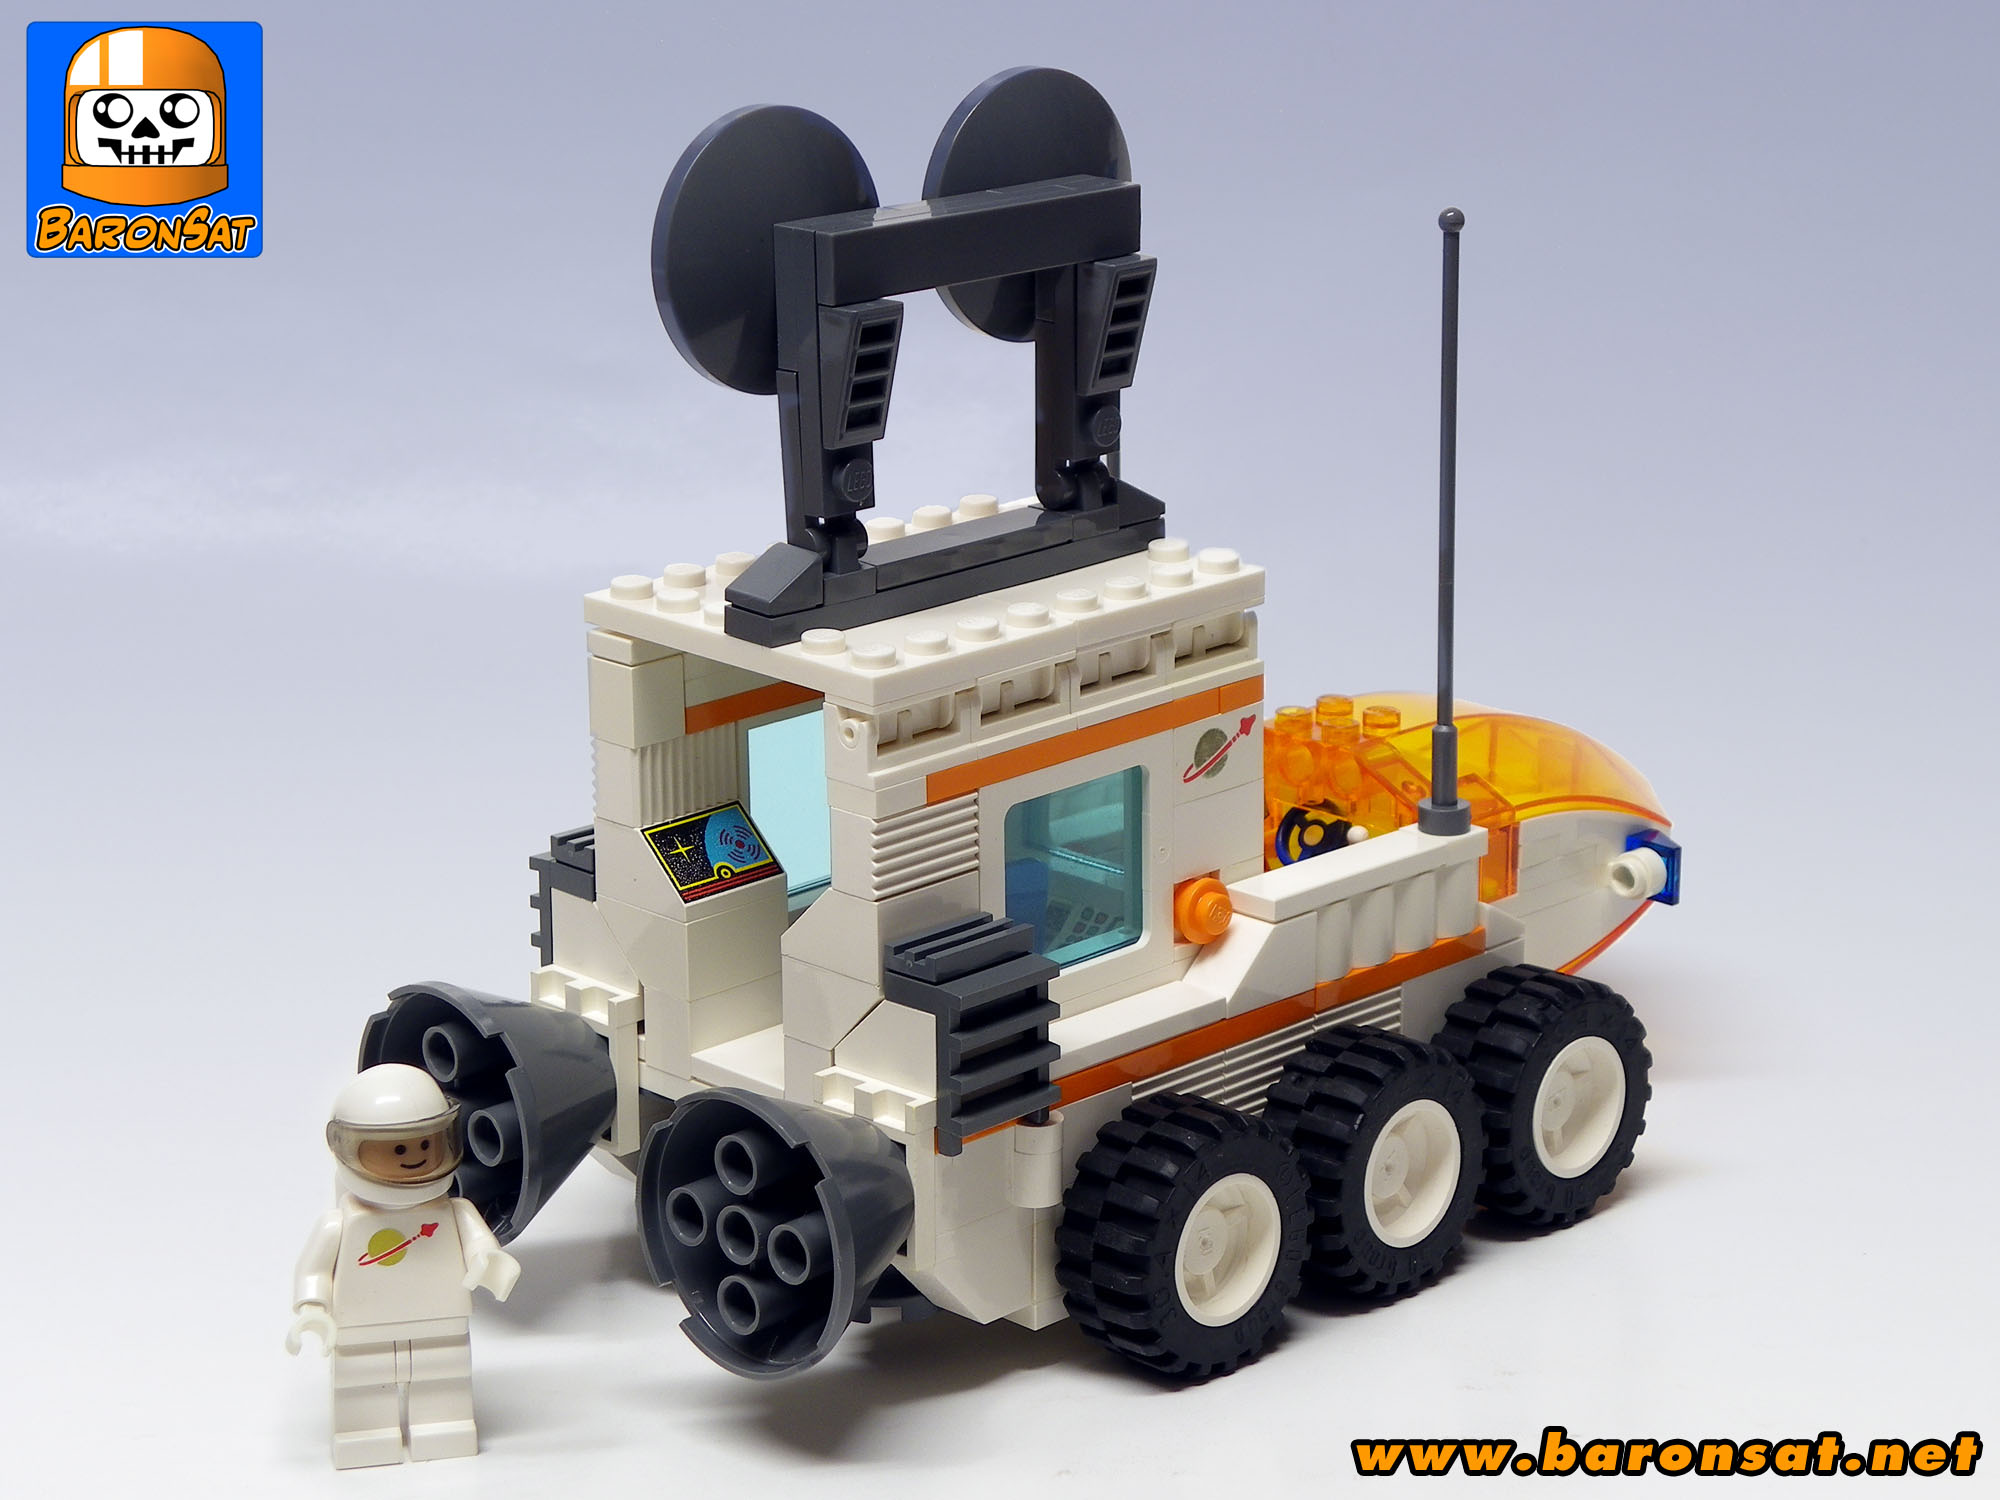 Modern 6927 all terrain vehicle moc lego back